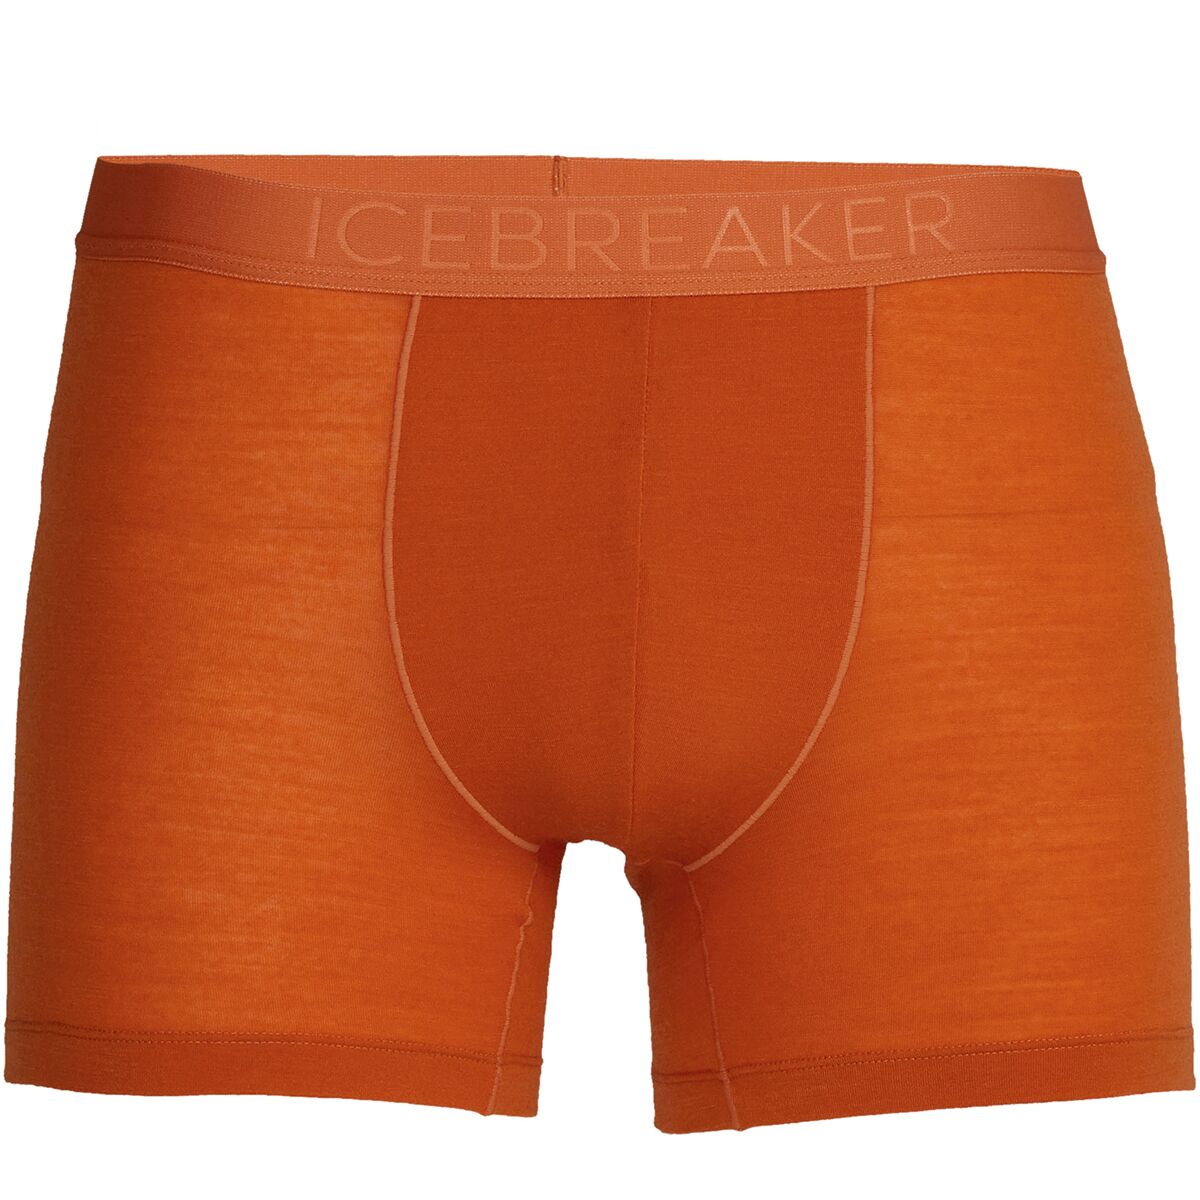 Icebreaker Anatomica Cool-Lite Boxer - Men's - Clothing